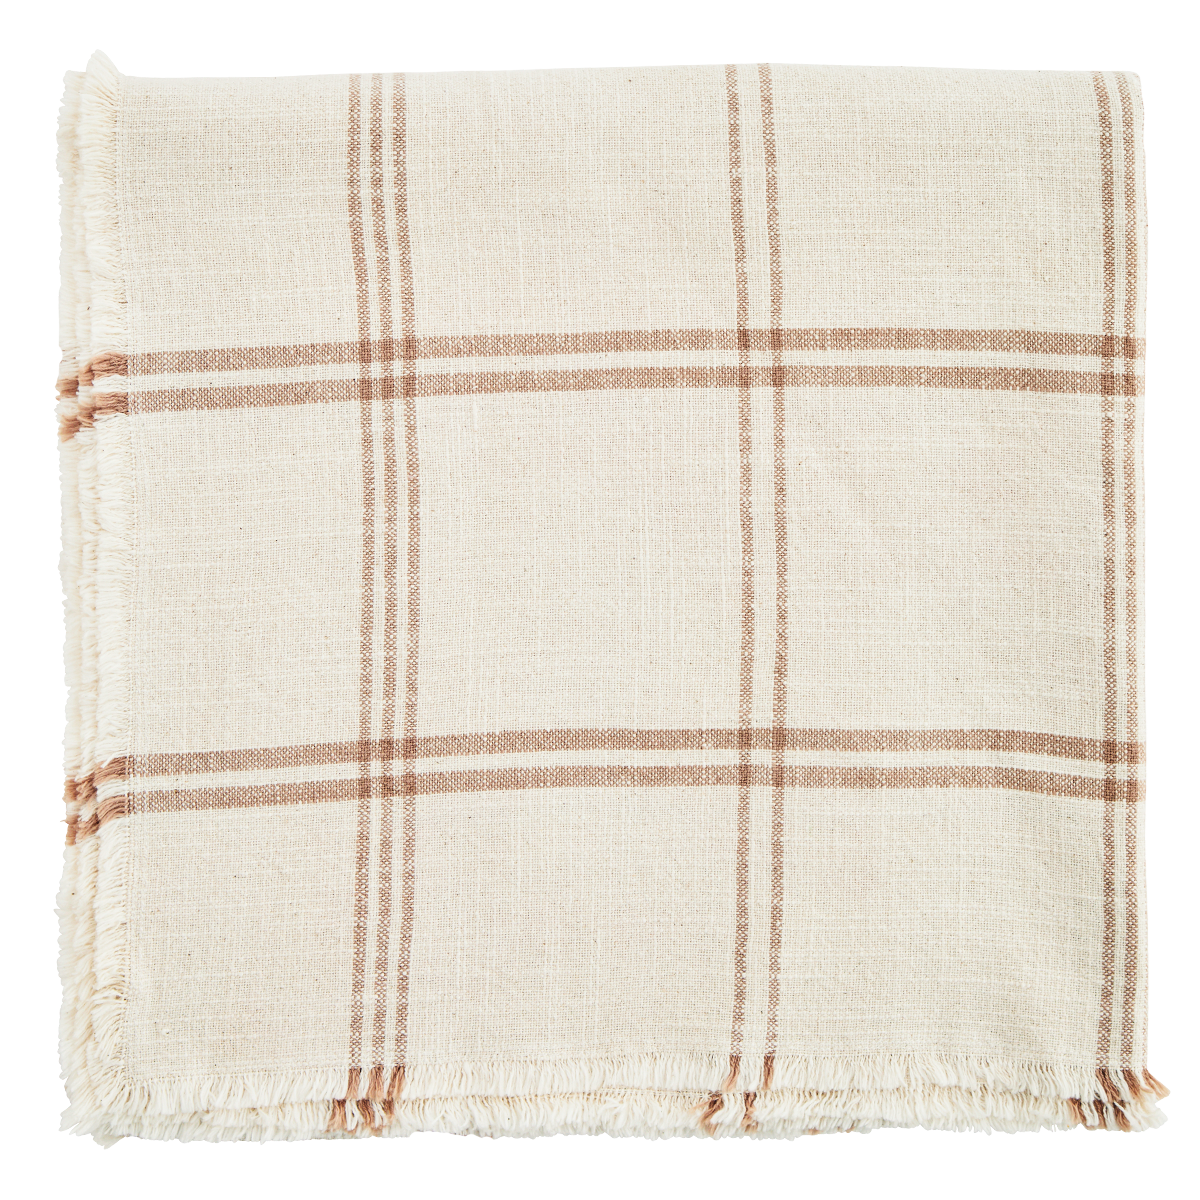 Checked cotton tablecloth 150x150